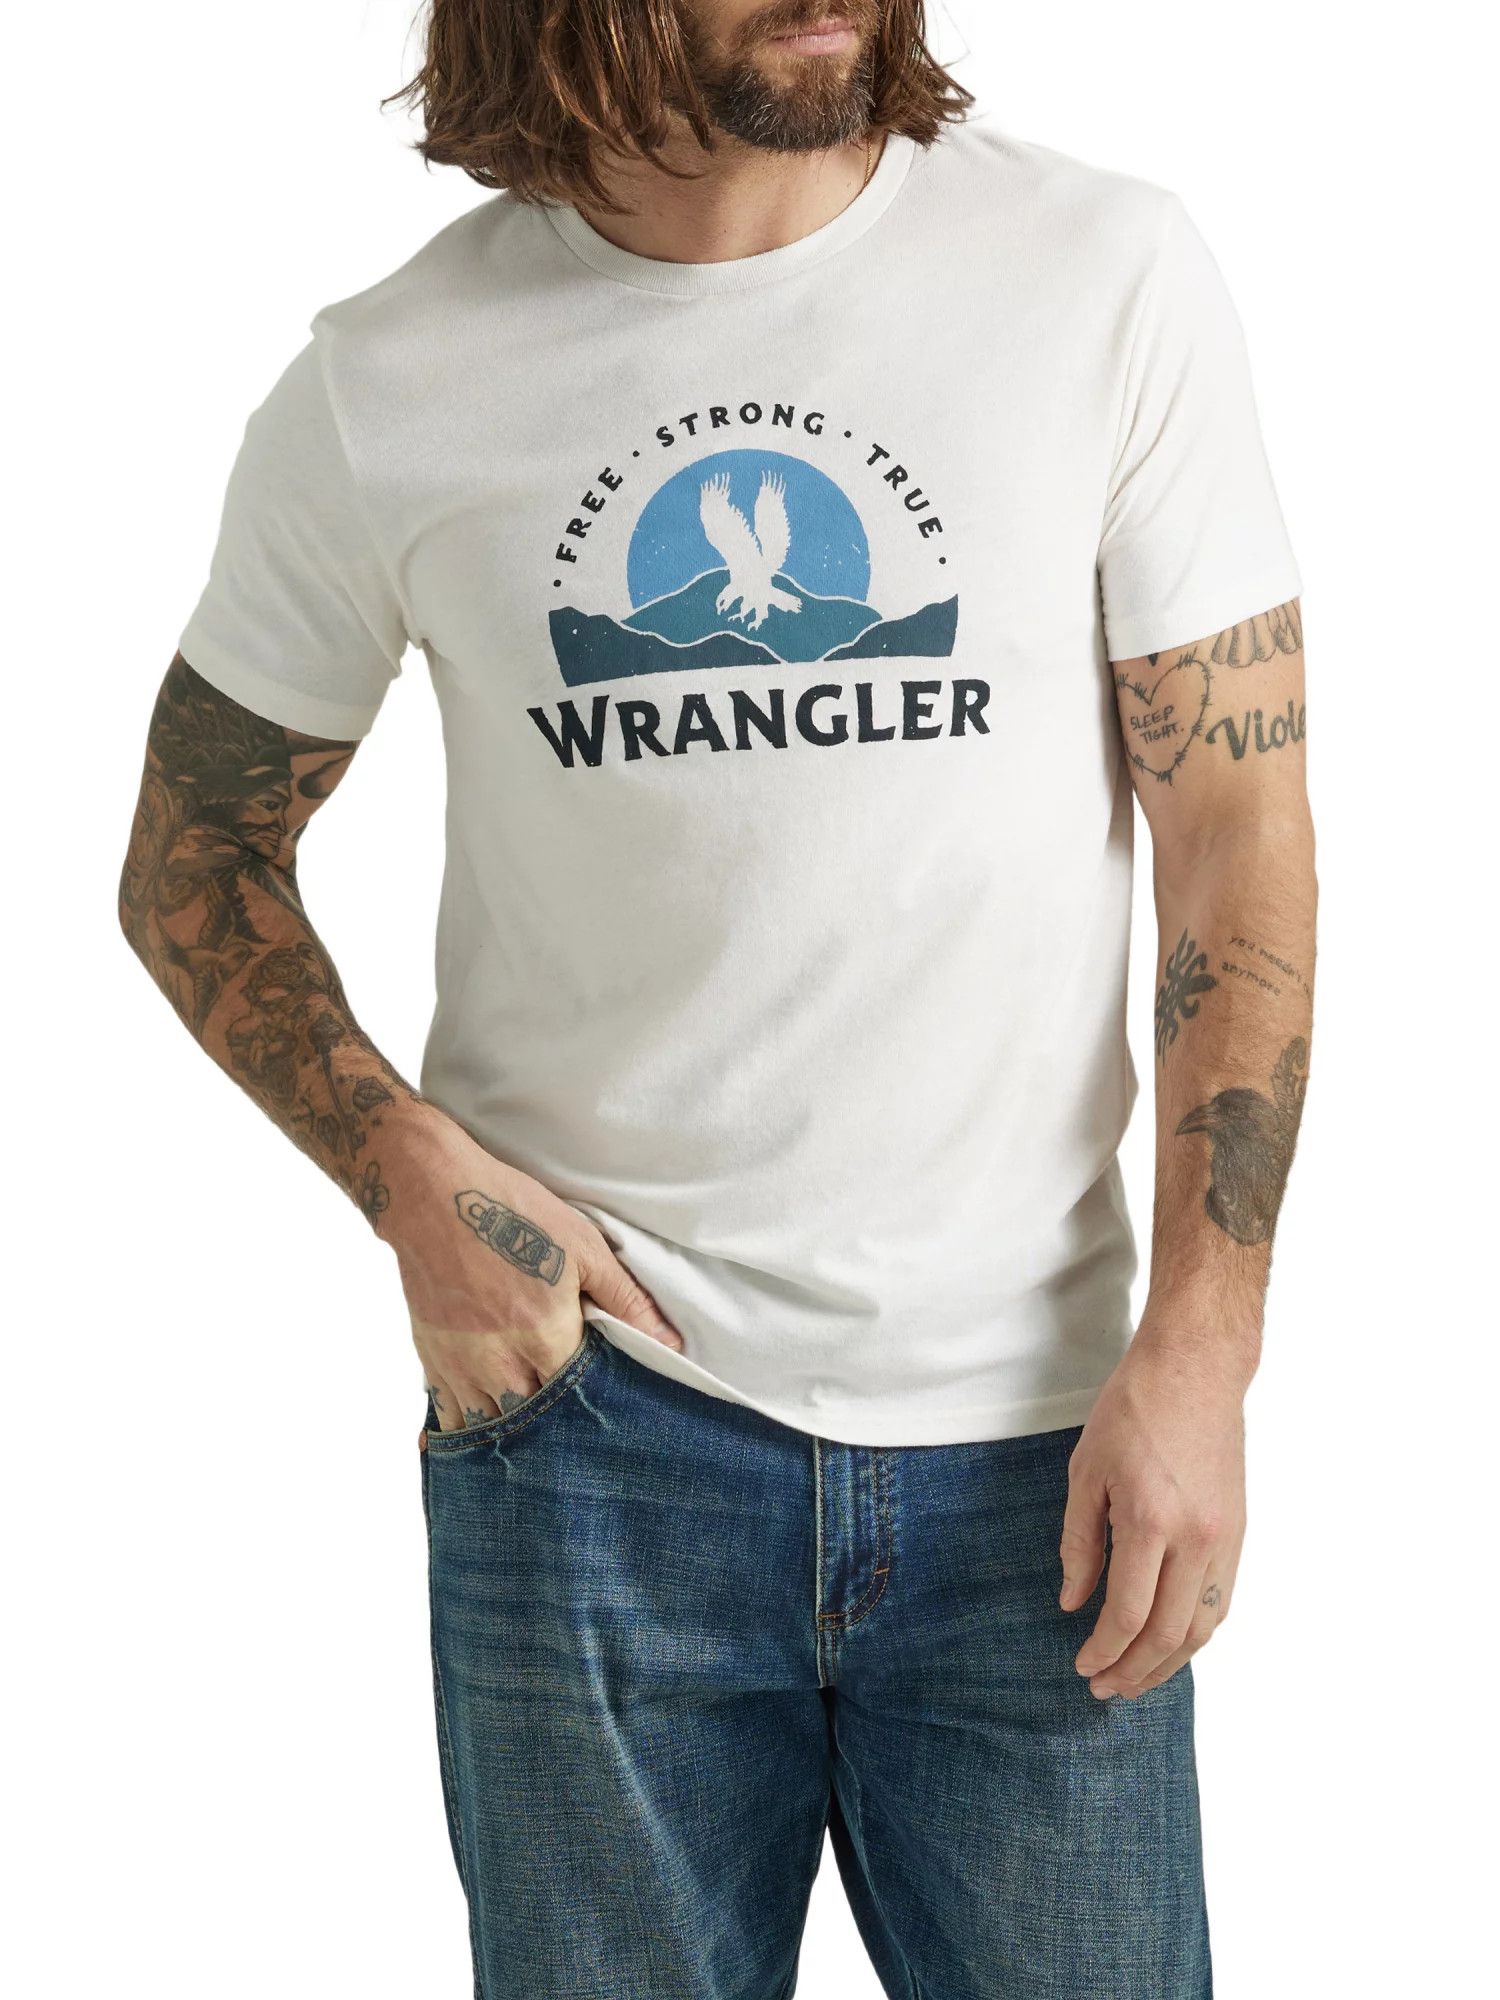 Wrangler® Men's Graphic Logo Tee with Short Sleeves, Sizes S-3XL | Walmart (US)